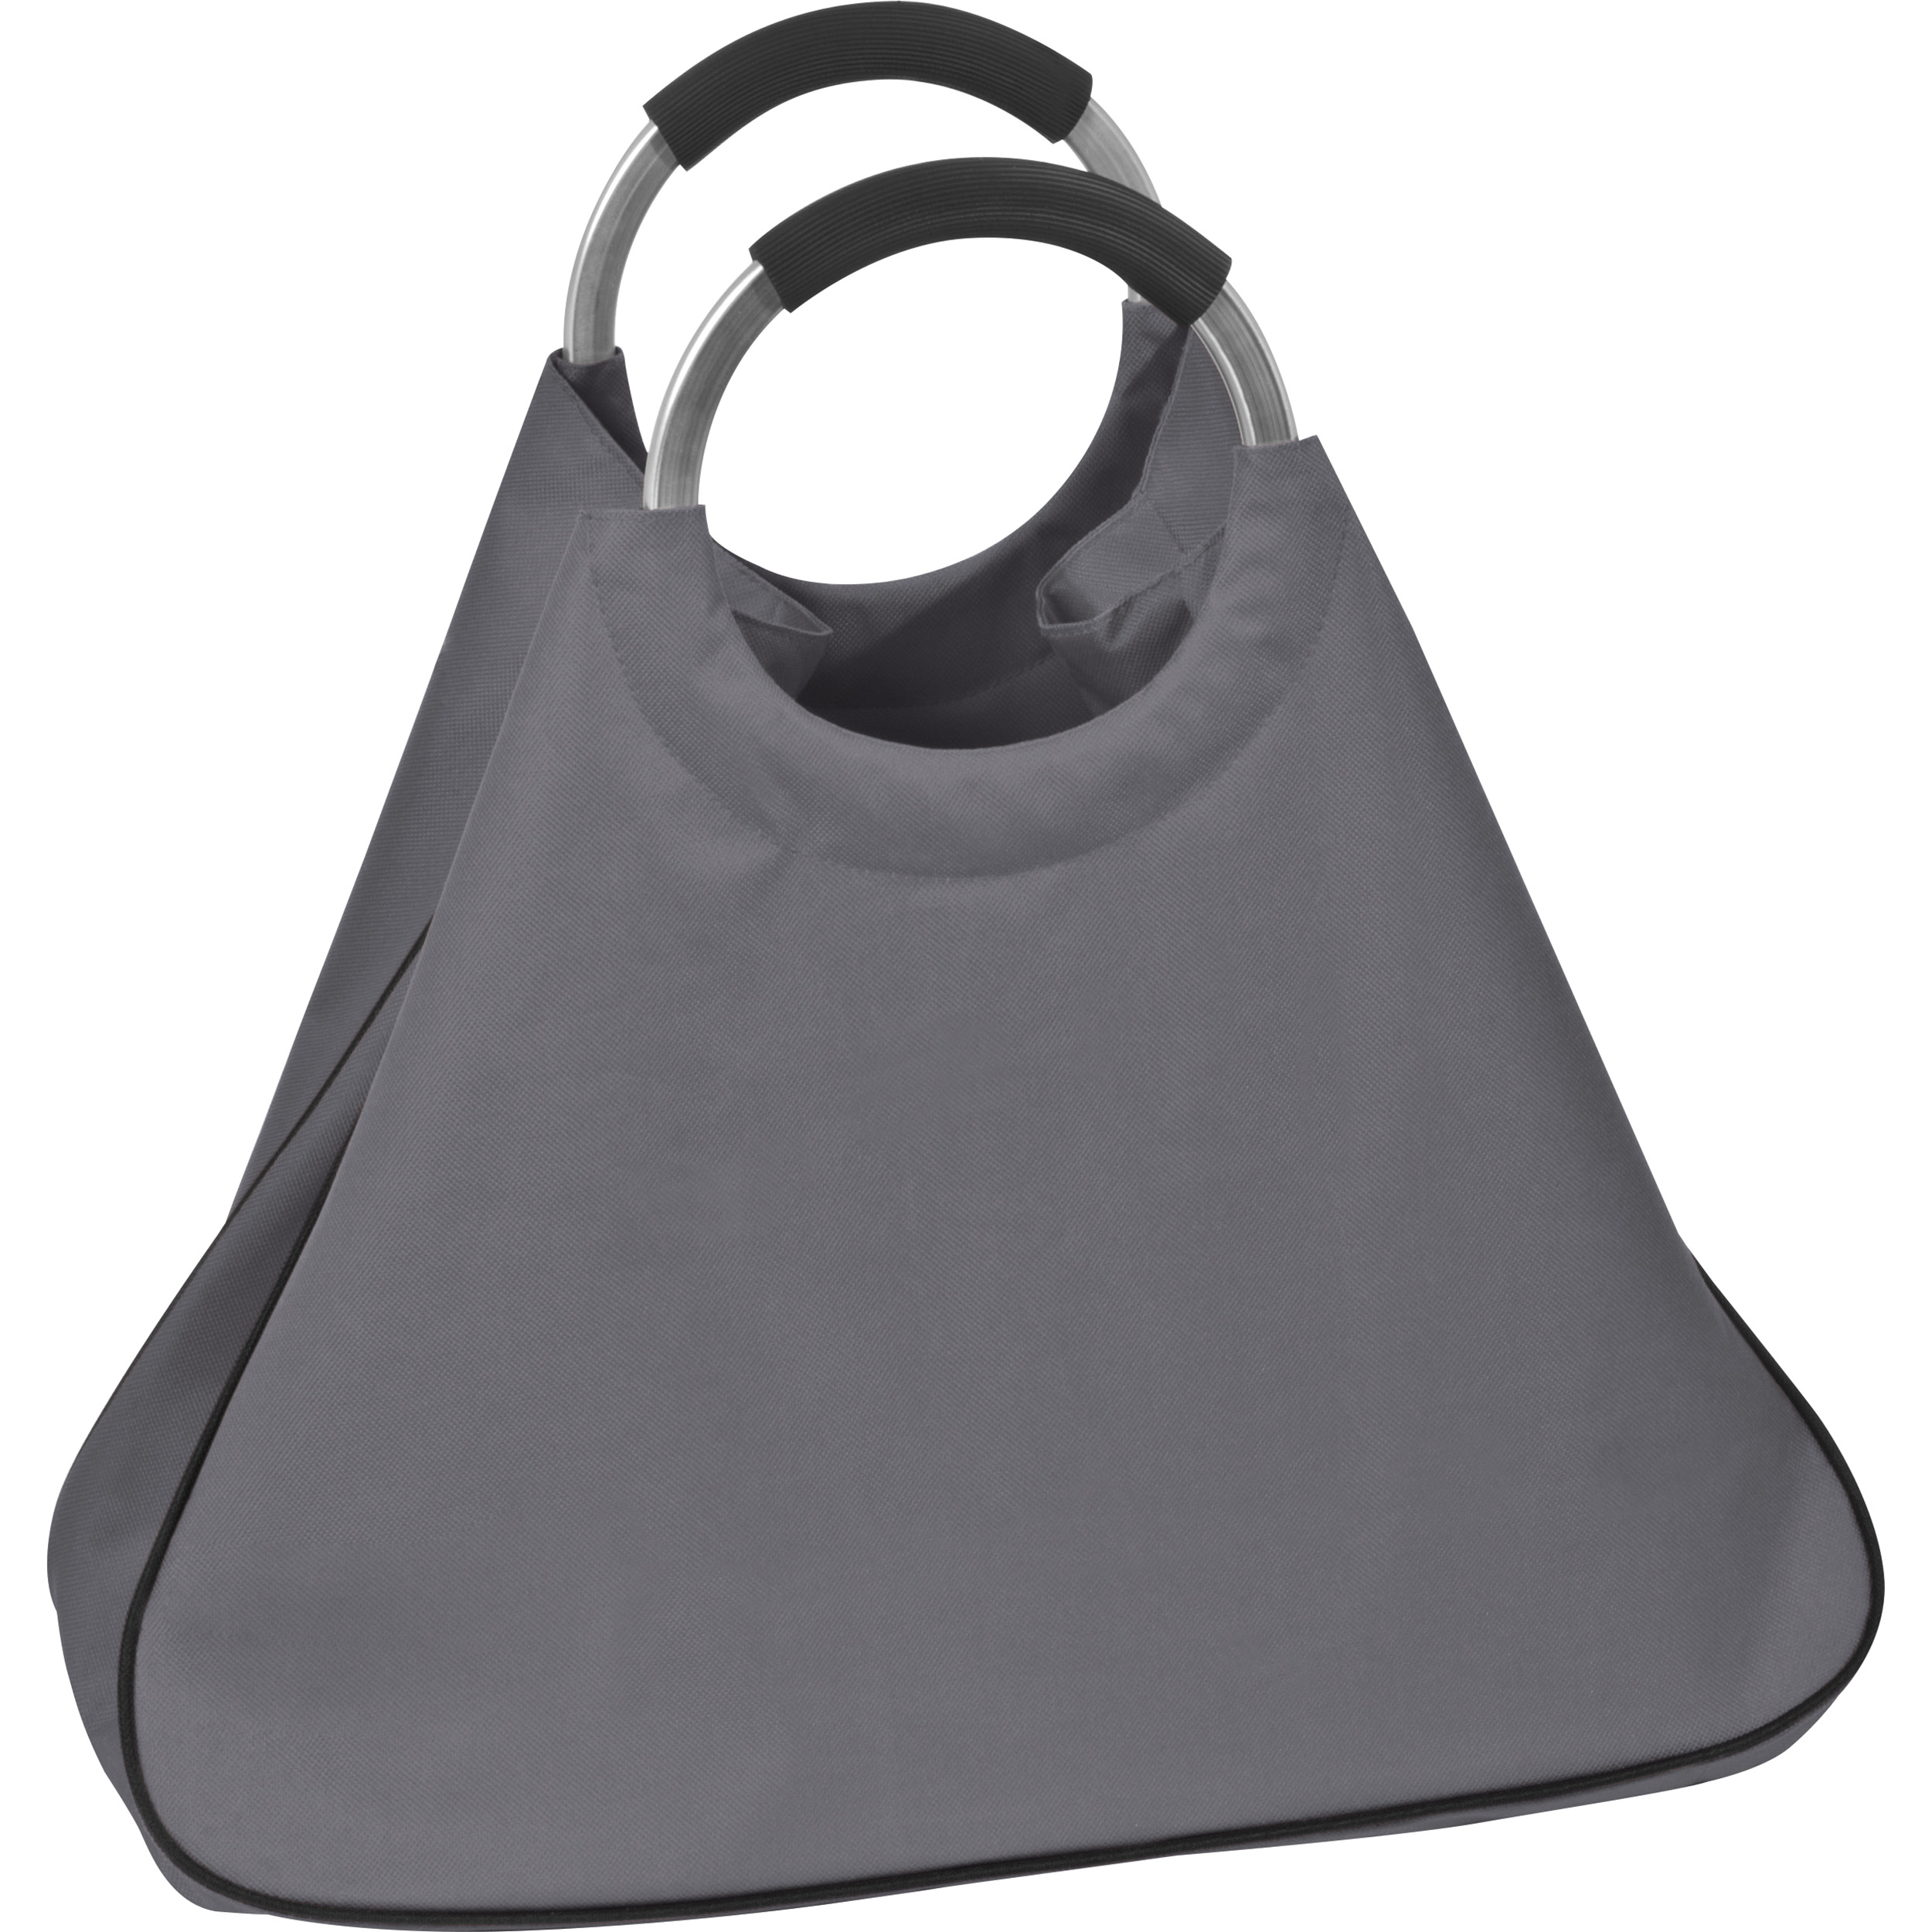 Shopping bag with aluminium handles